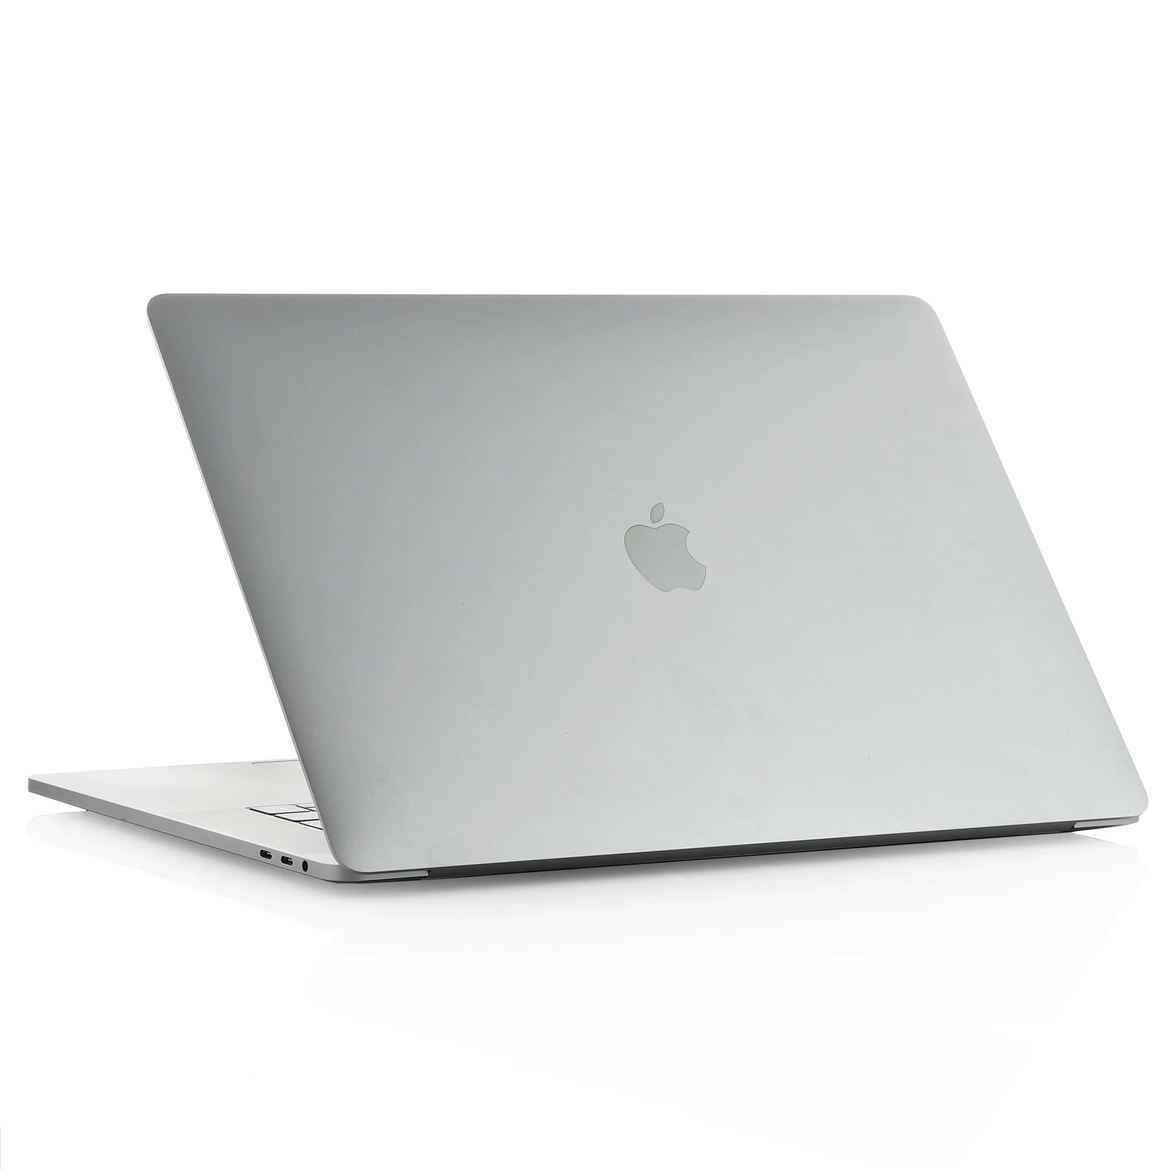 MacBook Pro 15.4-inch Laptop 2.6GHz Core i7 16GB RAM 1TB SSD - Space Gray (2018)